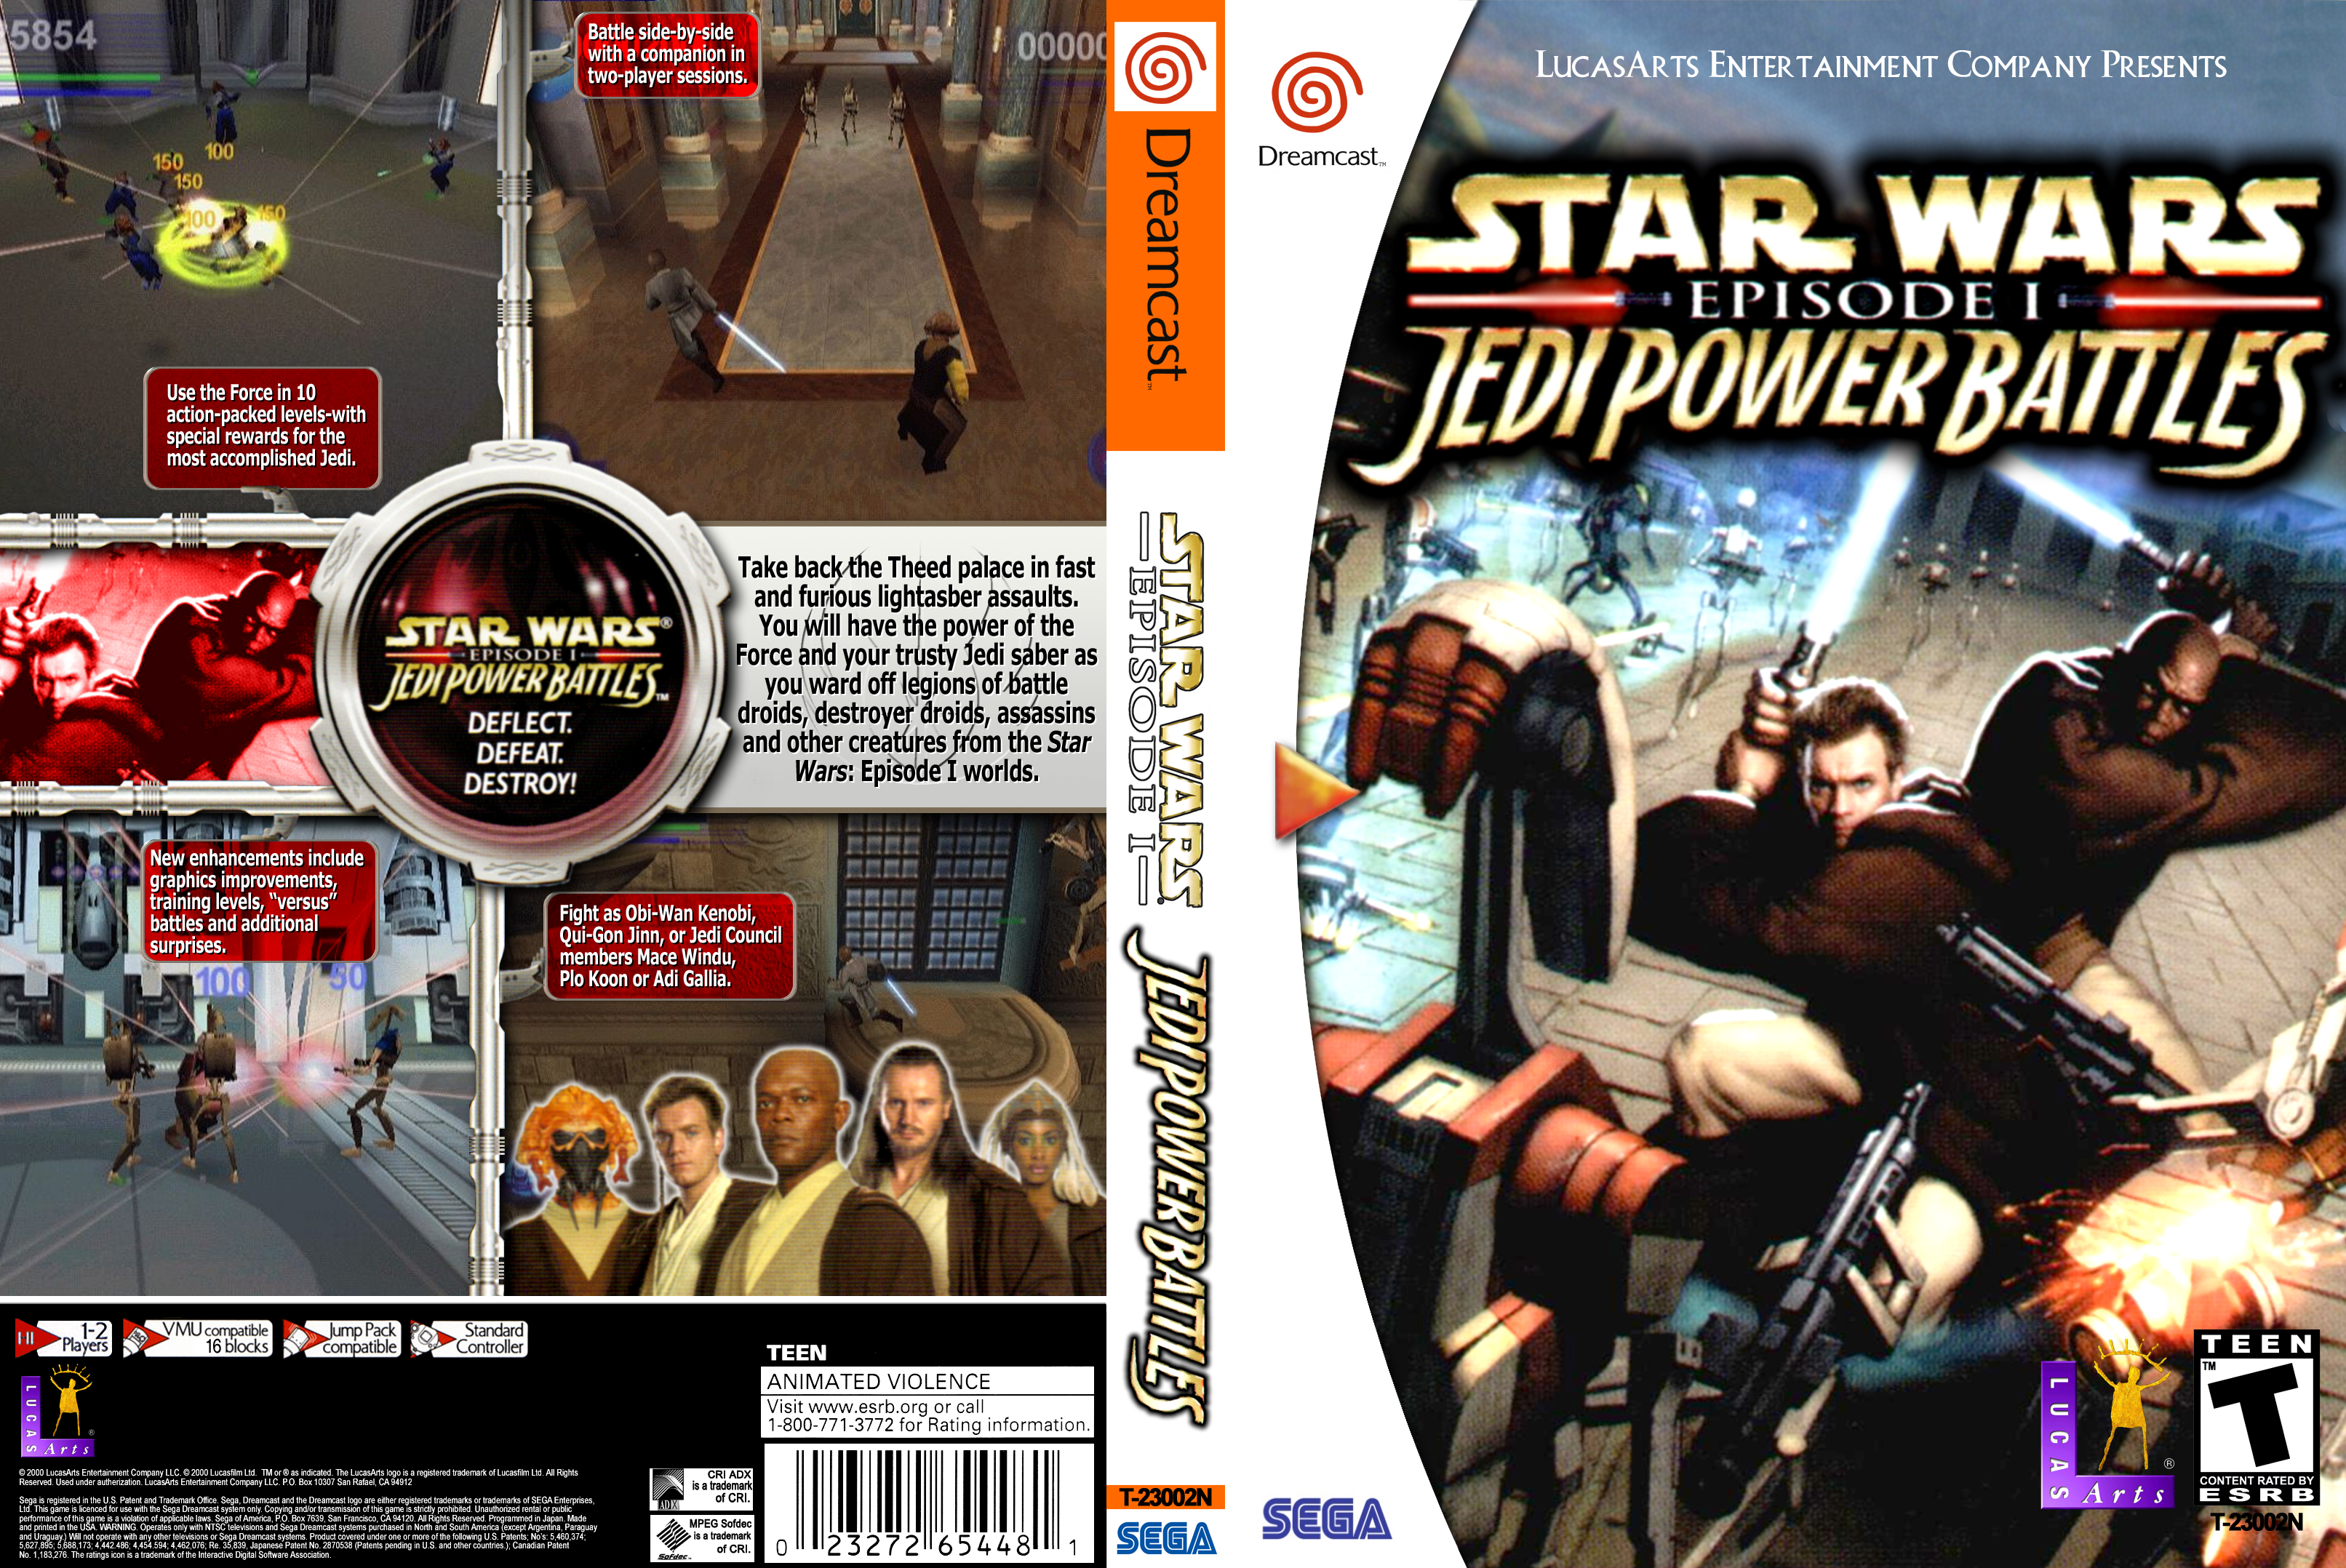 Star wars episode i jedi power. Sega Dreamcast Star Wars Episode 1. Star Wars Episode i Jedi Power Battles ps1. Star Wars Episode 1 Jedi Power Battles. Star Wars Episode 1 Racer Dreamcast обложка.